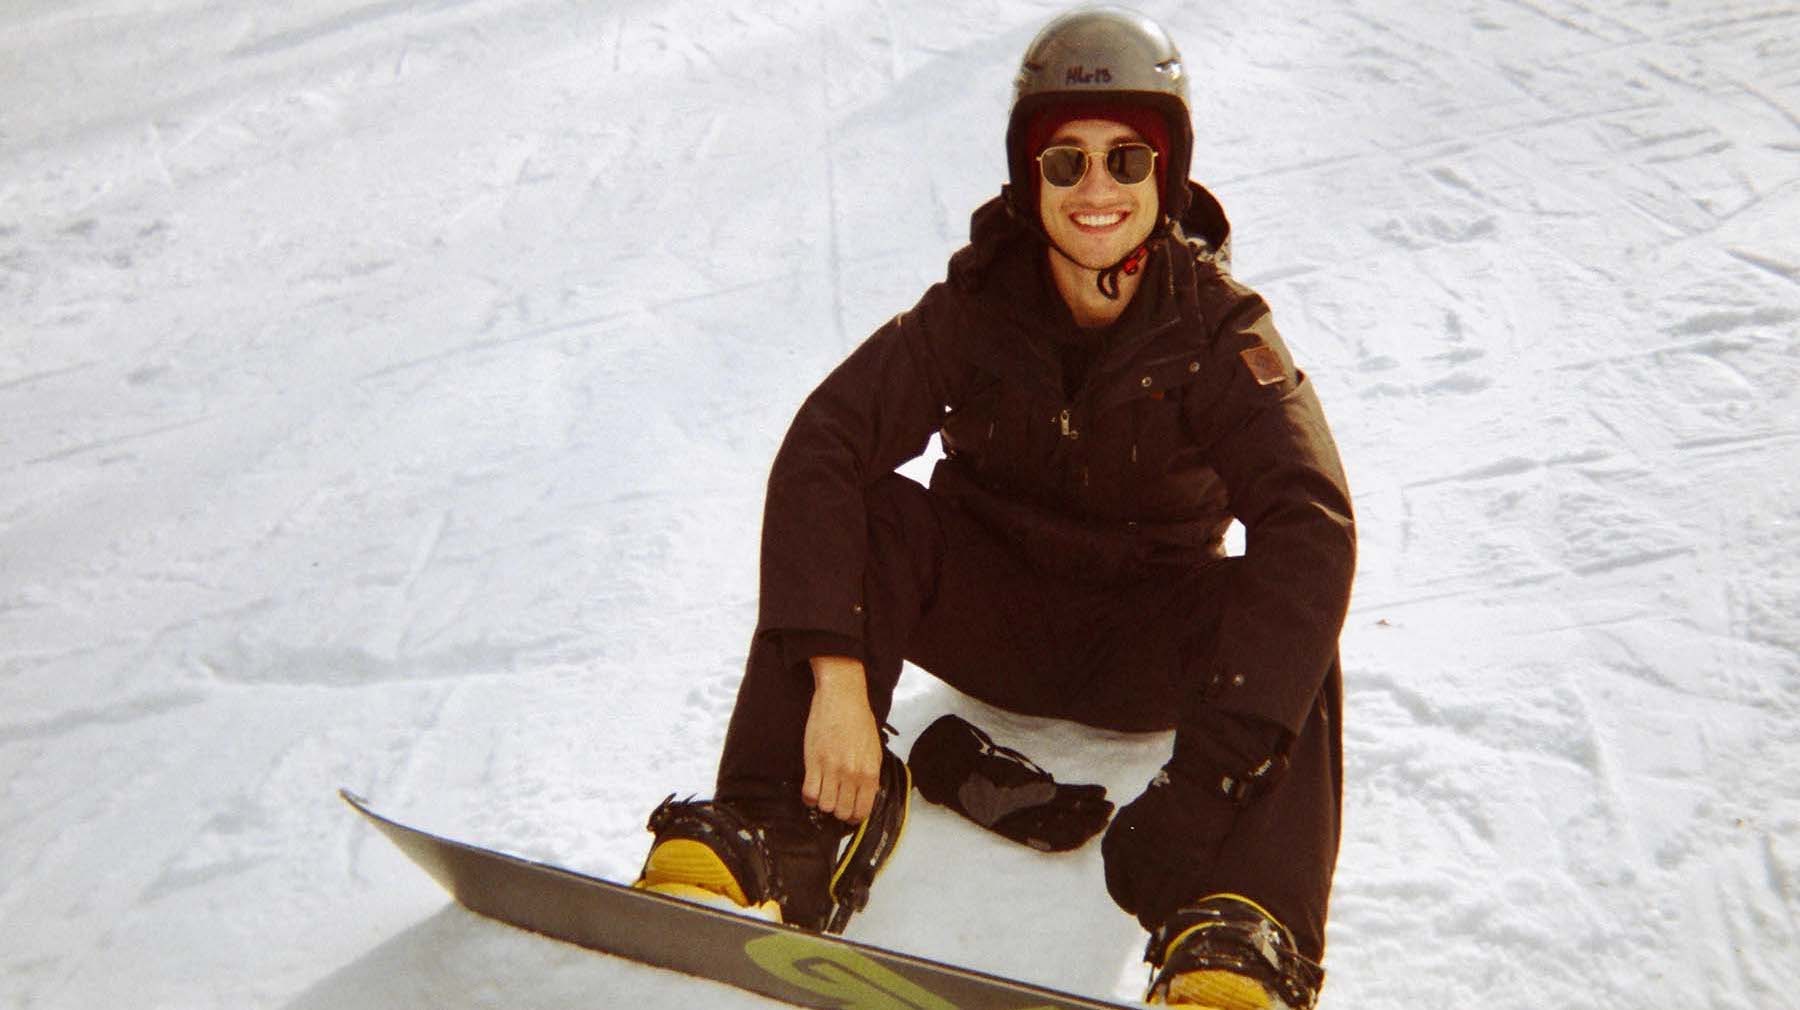 Kyle Balster snowboarding